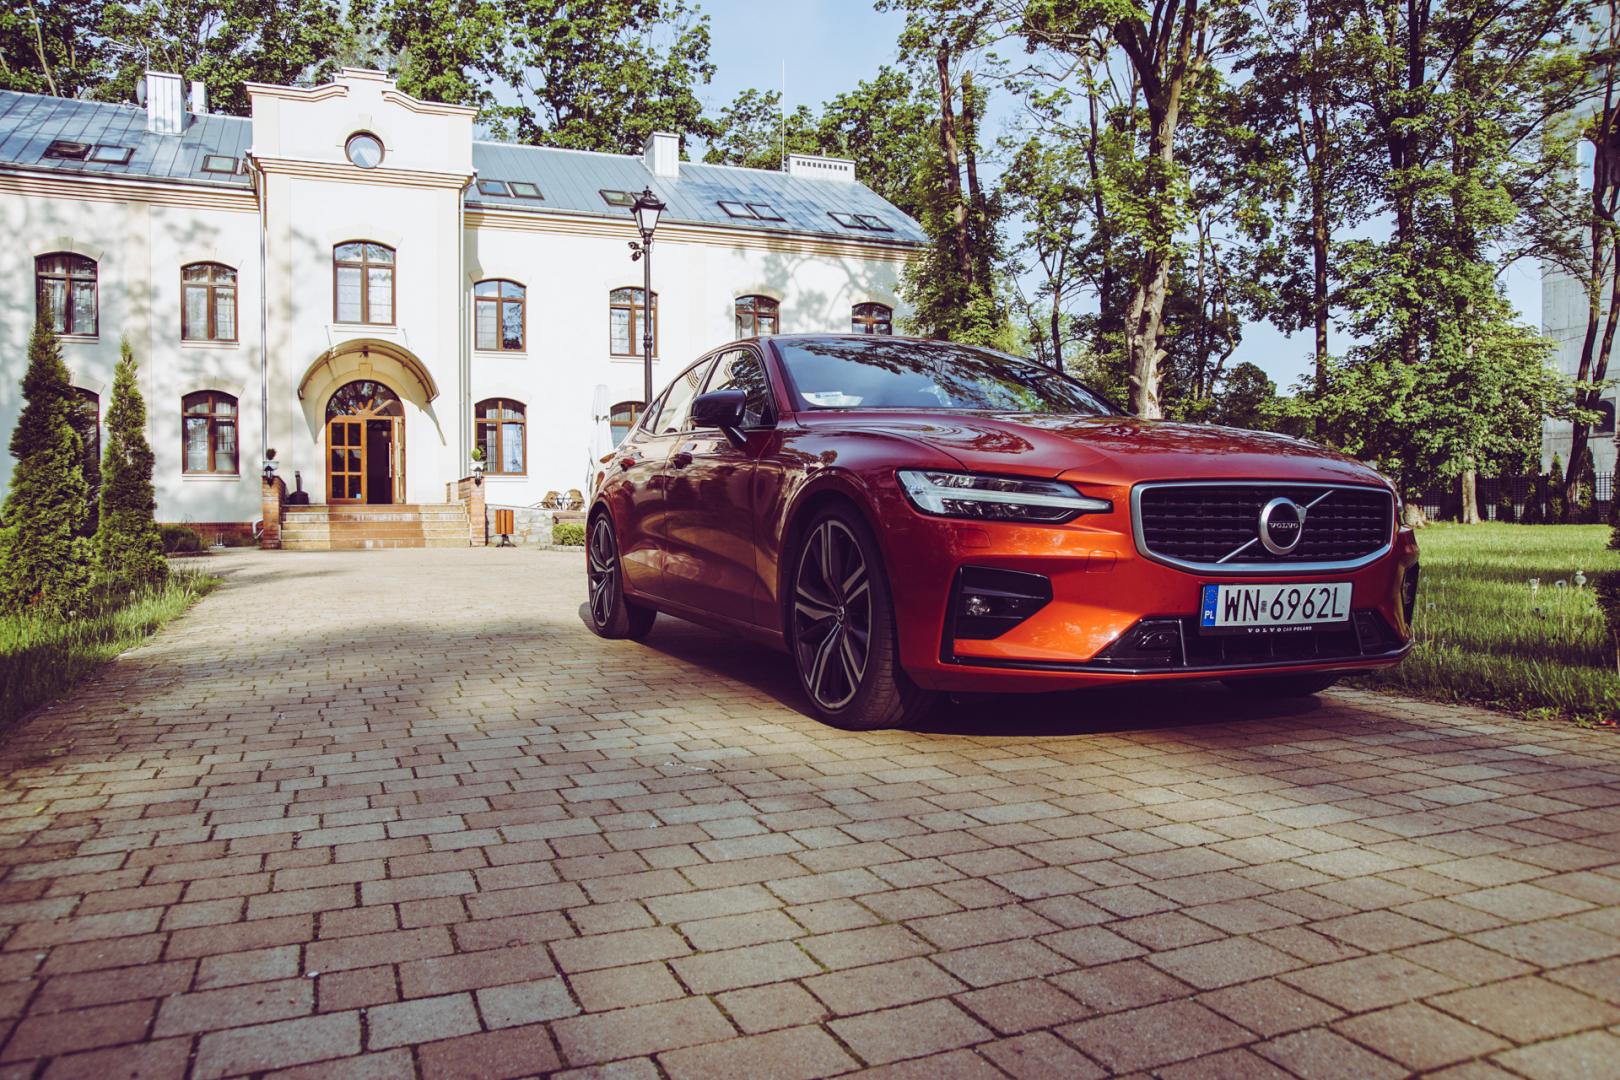 Volvo S60 sport po szwedzku • AutoCentrum.pl